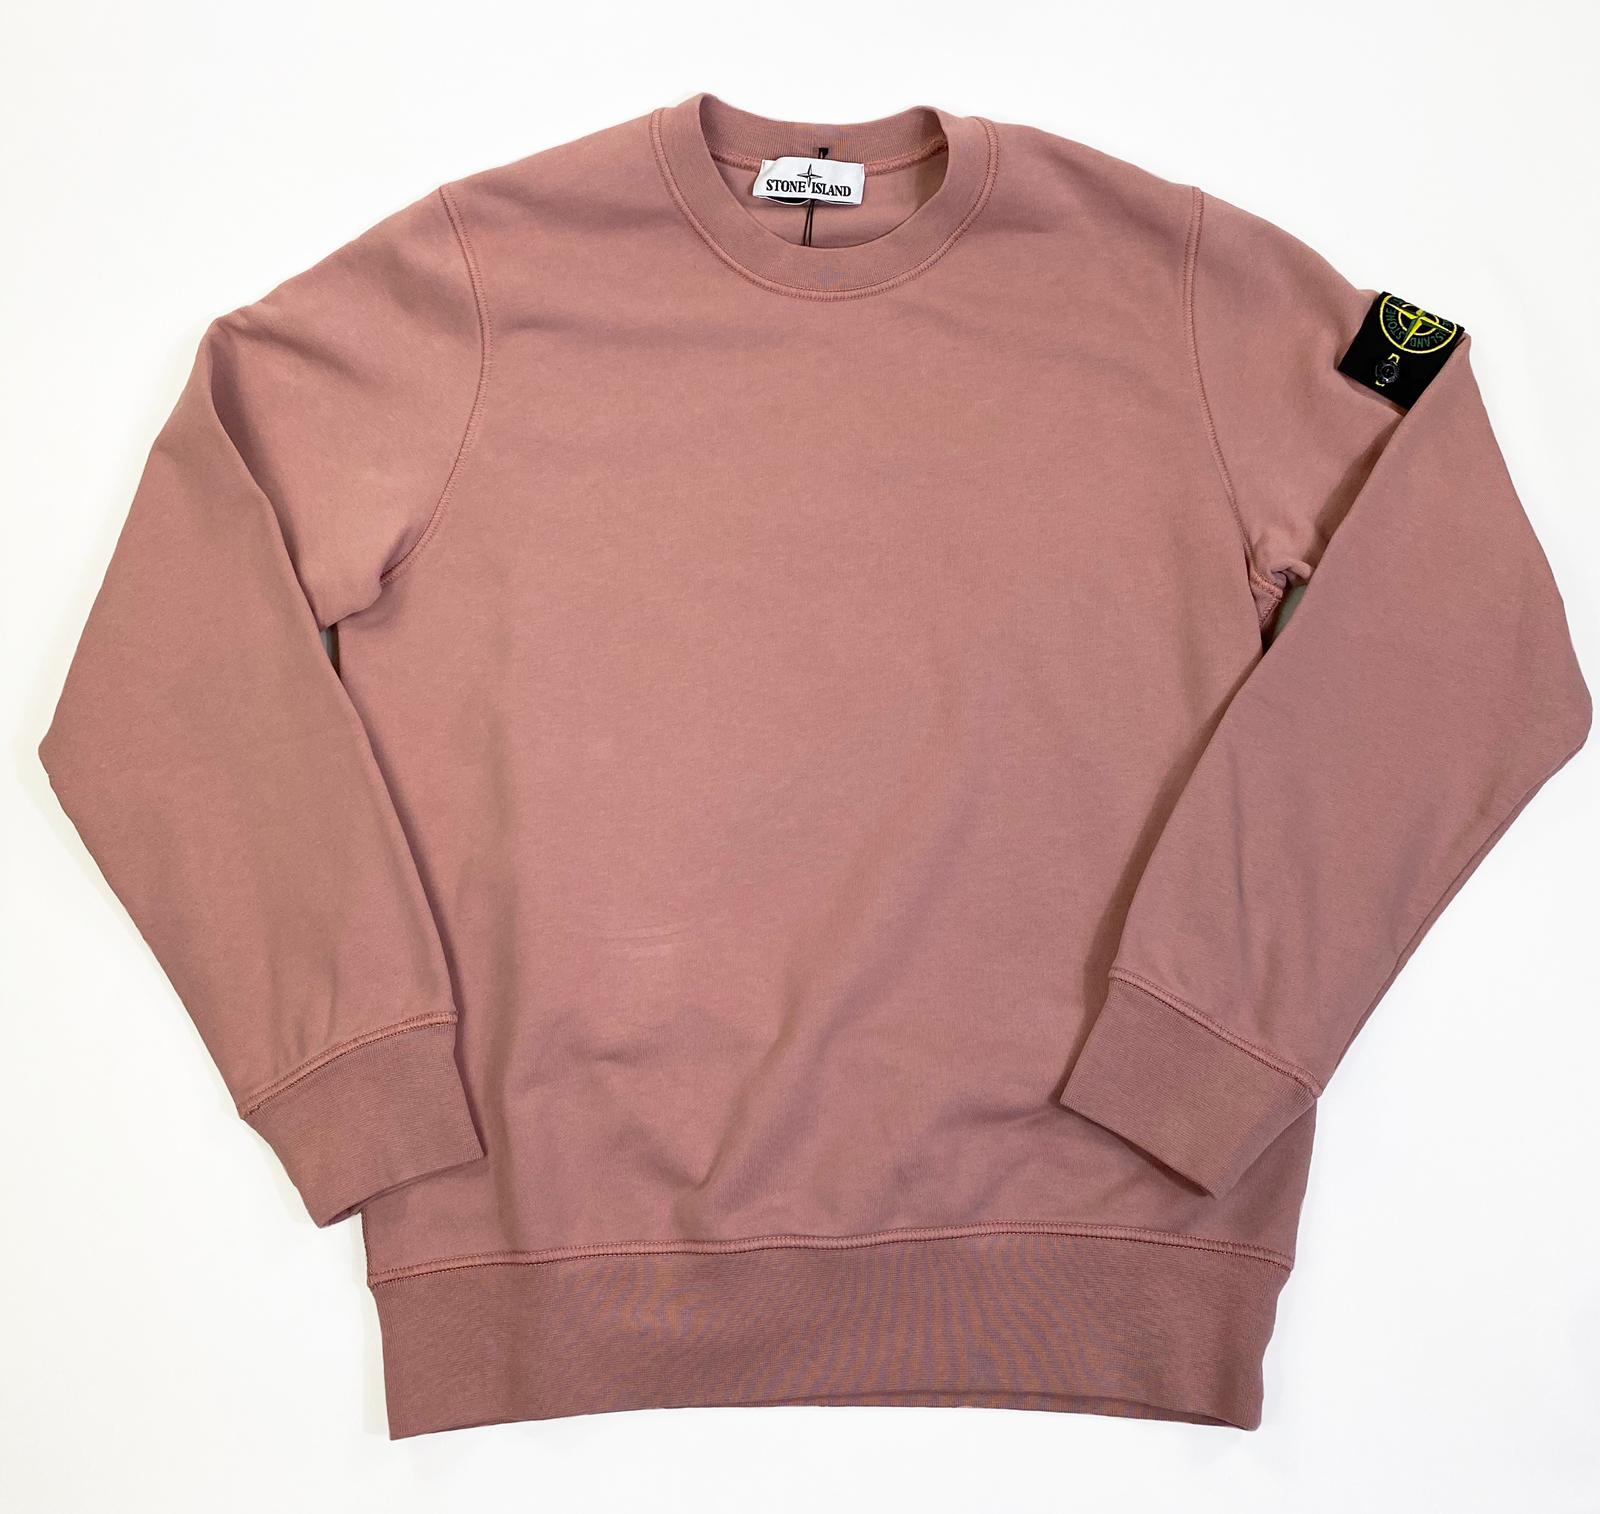 Stone Island Garment Dyed Sweatshirt Pink 63051 V0086 - Esquire Clothing